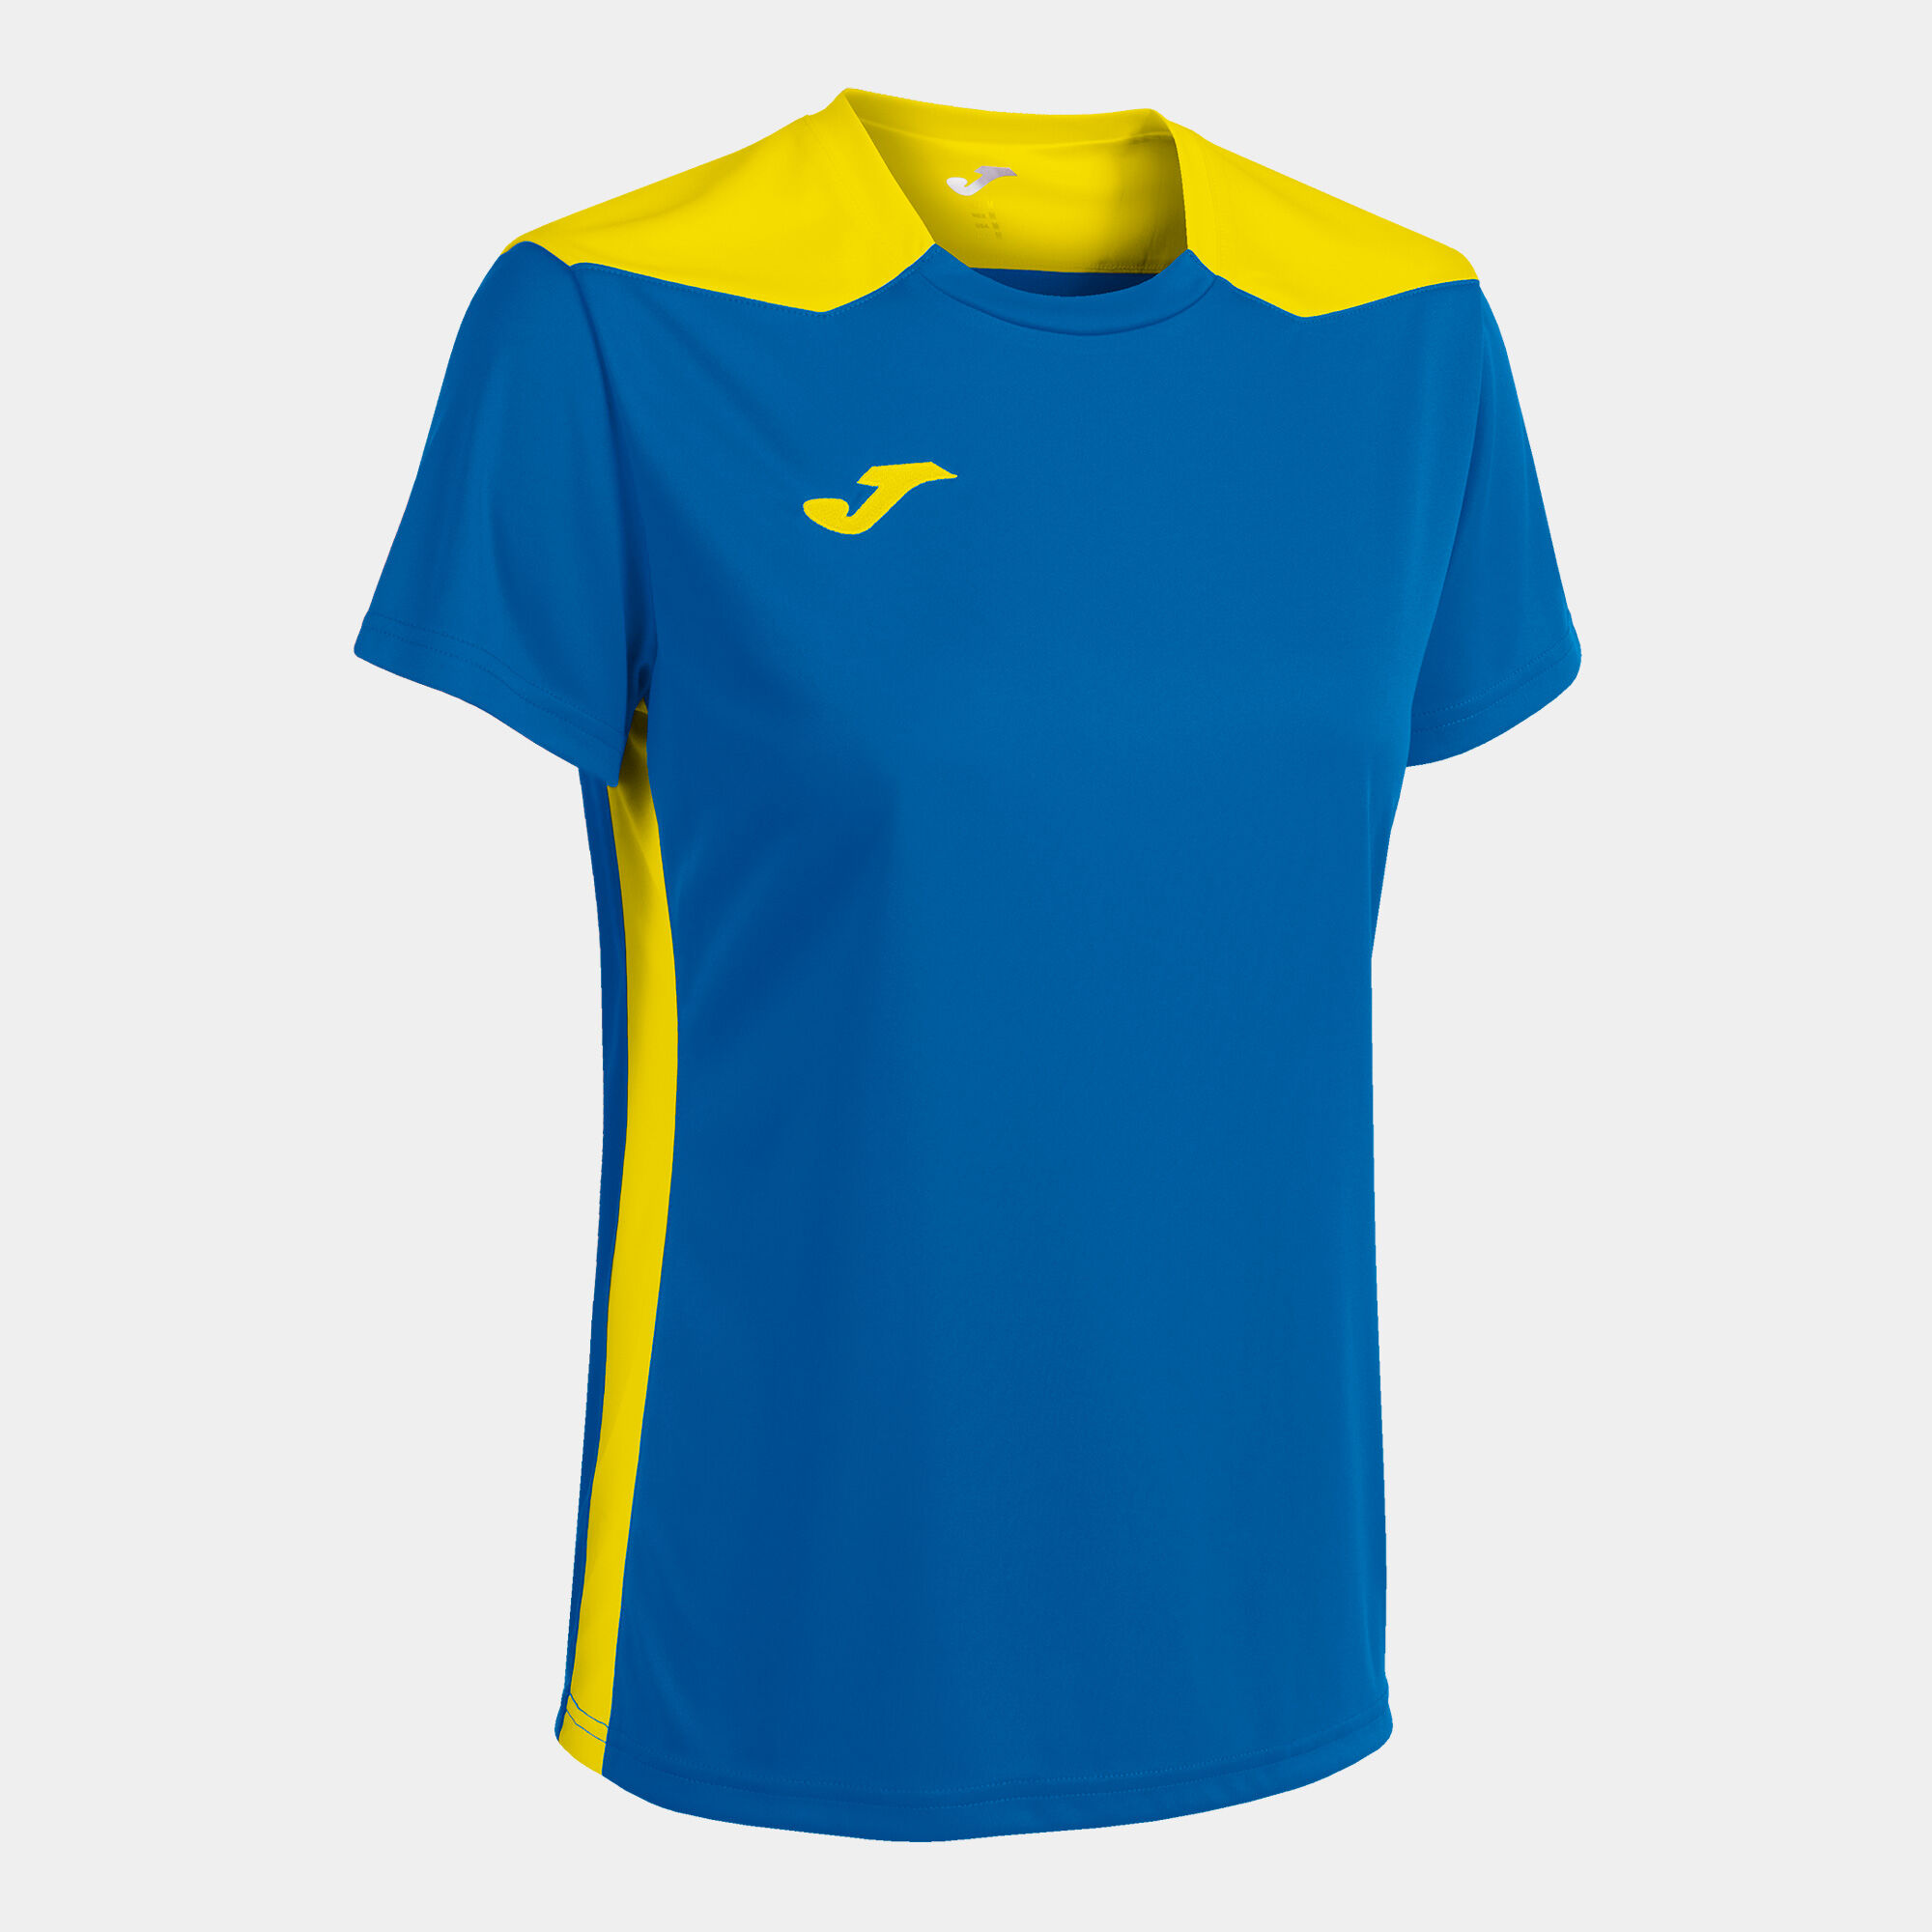 Shirt short sleeve woman Championship VI royal blue yellow